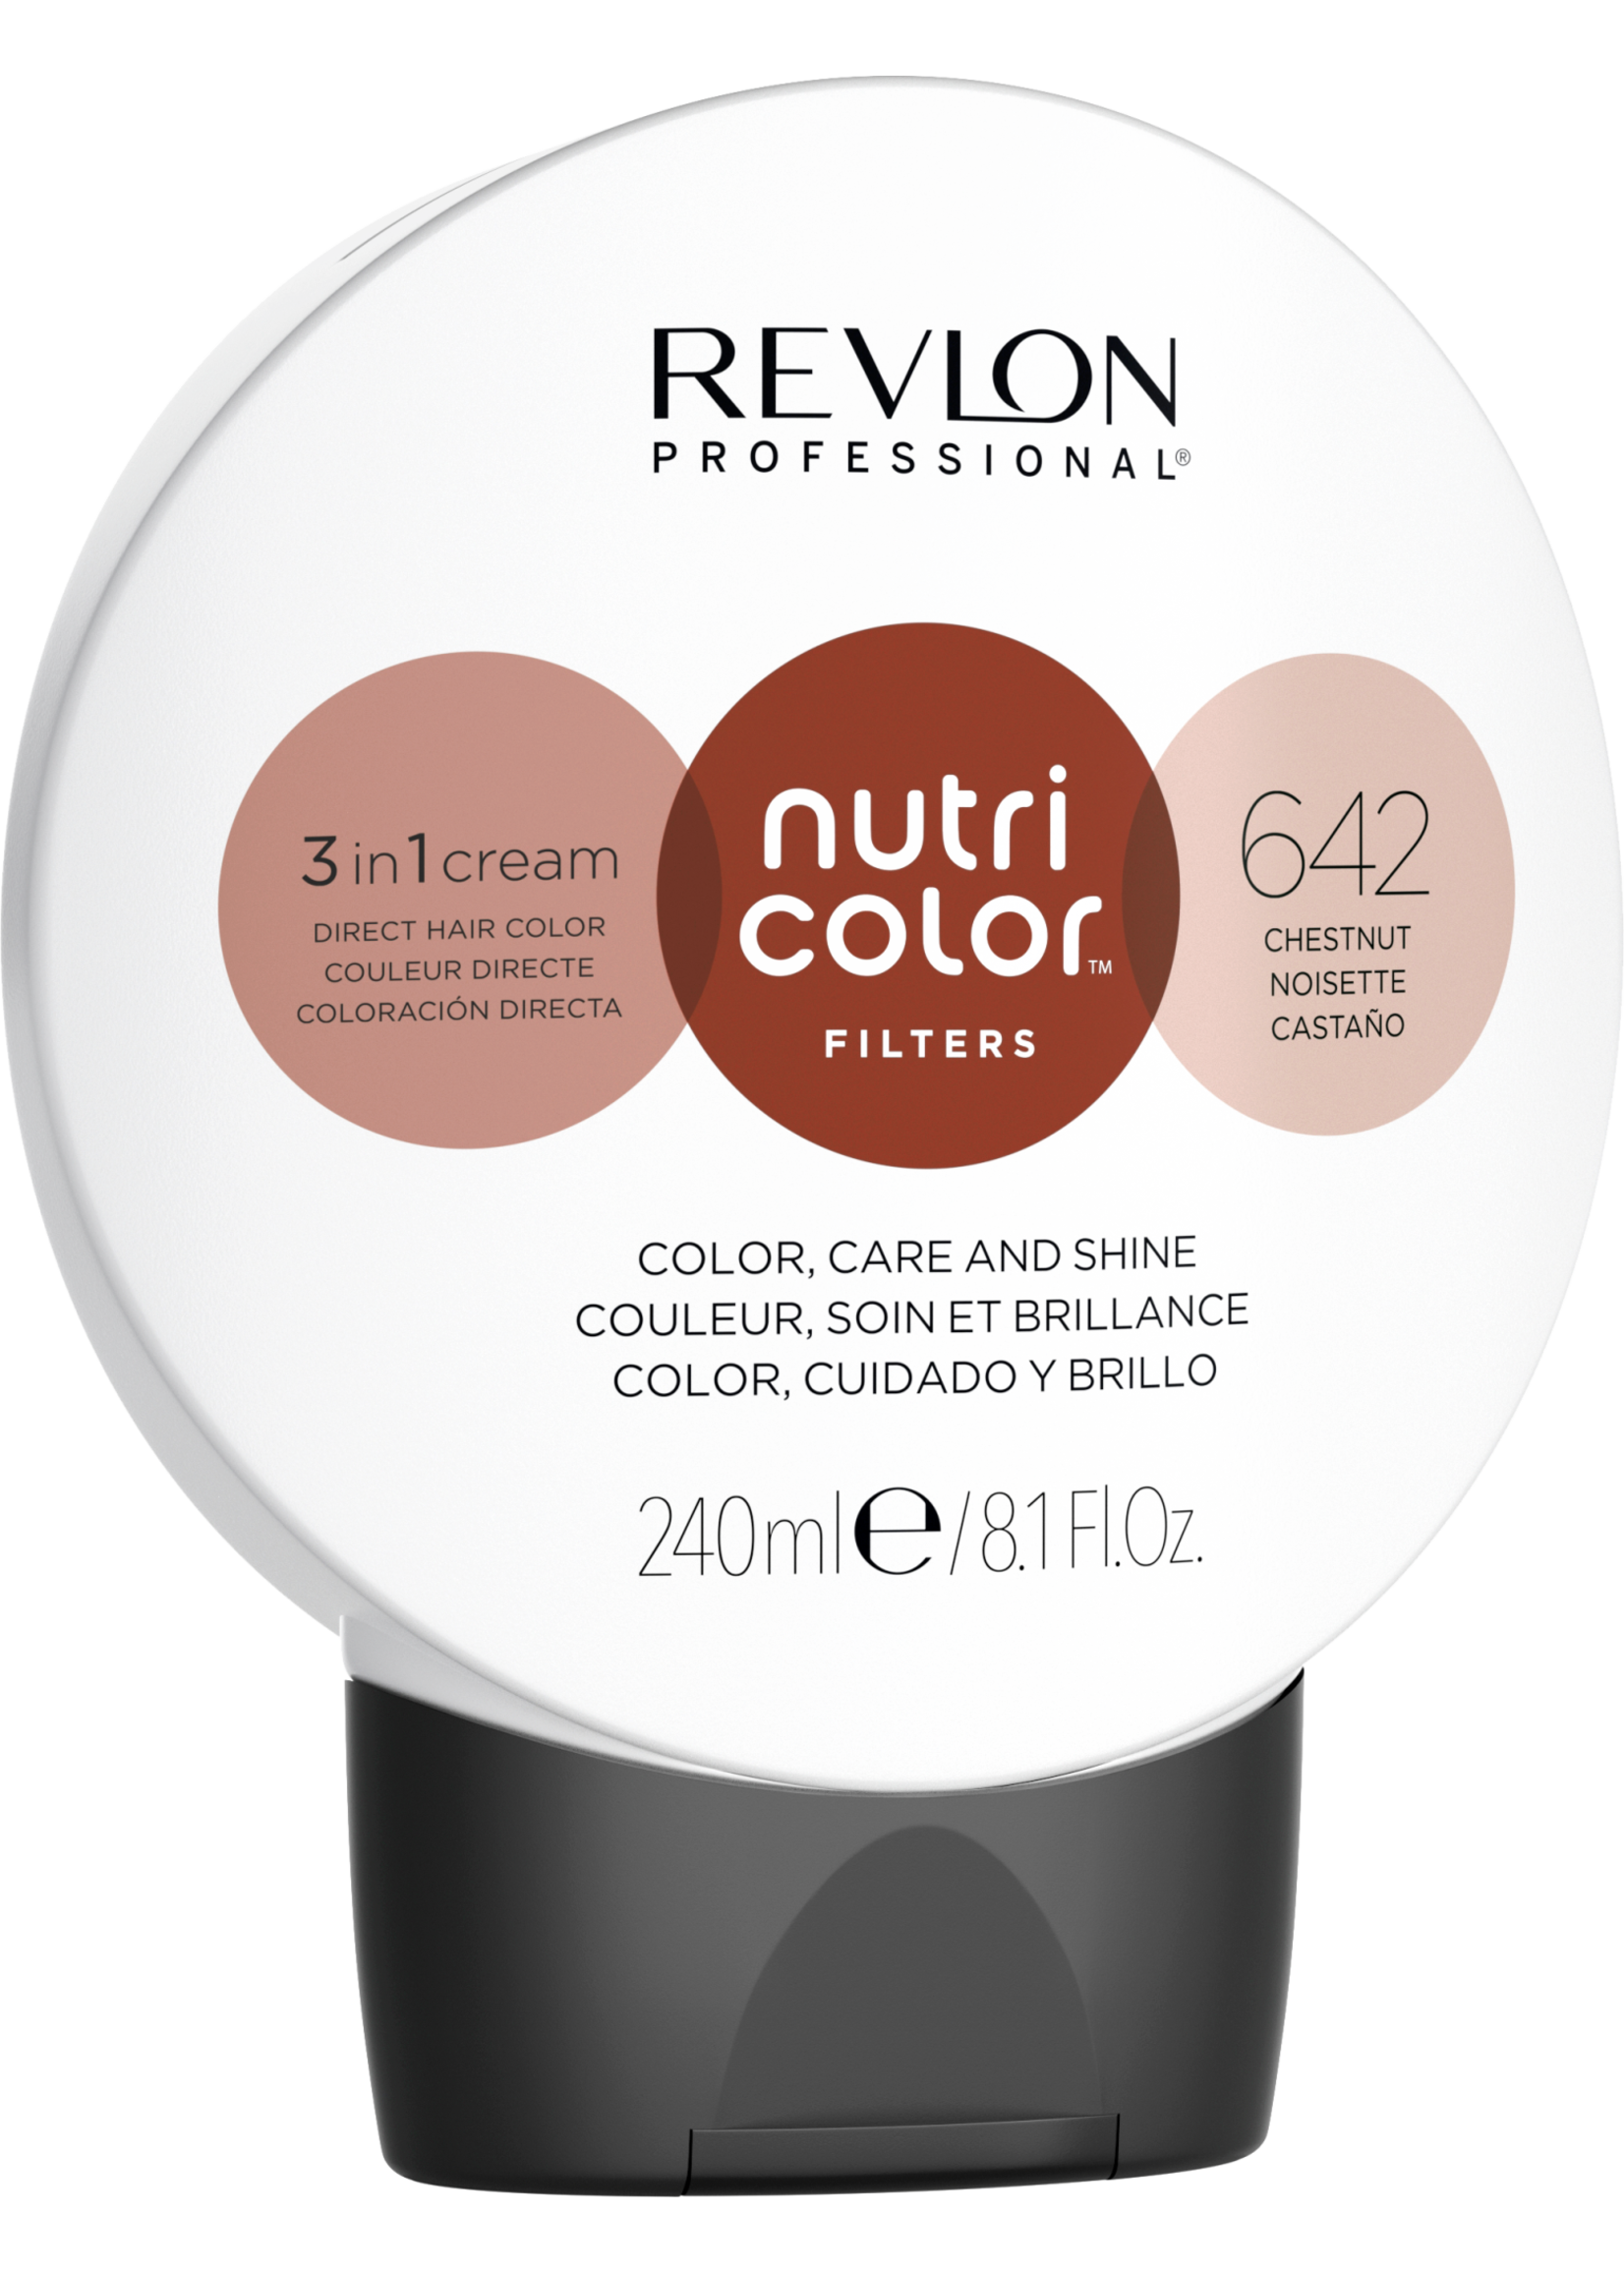 Revlon Professional Revlon Professional Nutri Color Filters 642 Chestnut 240ml